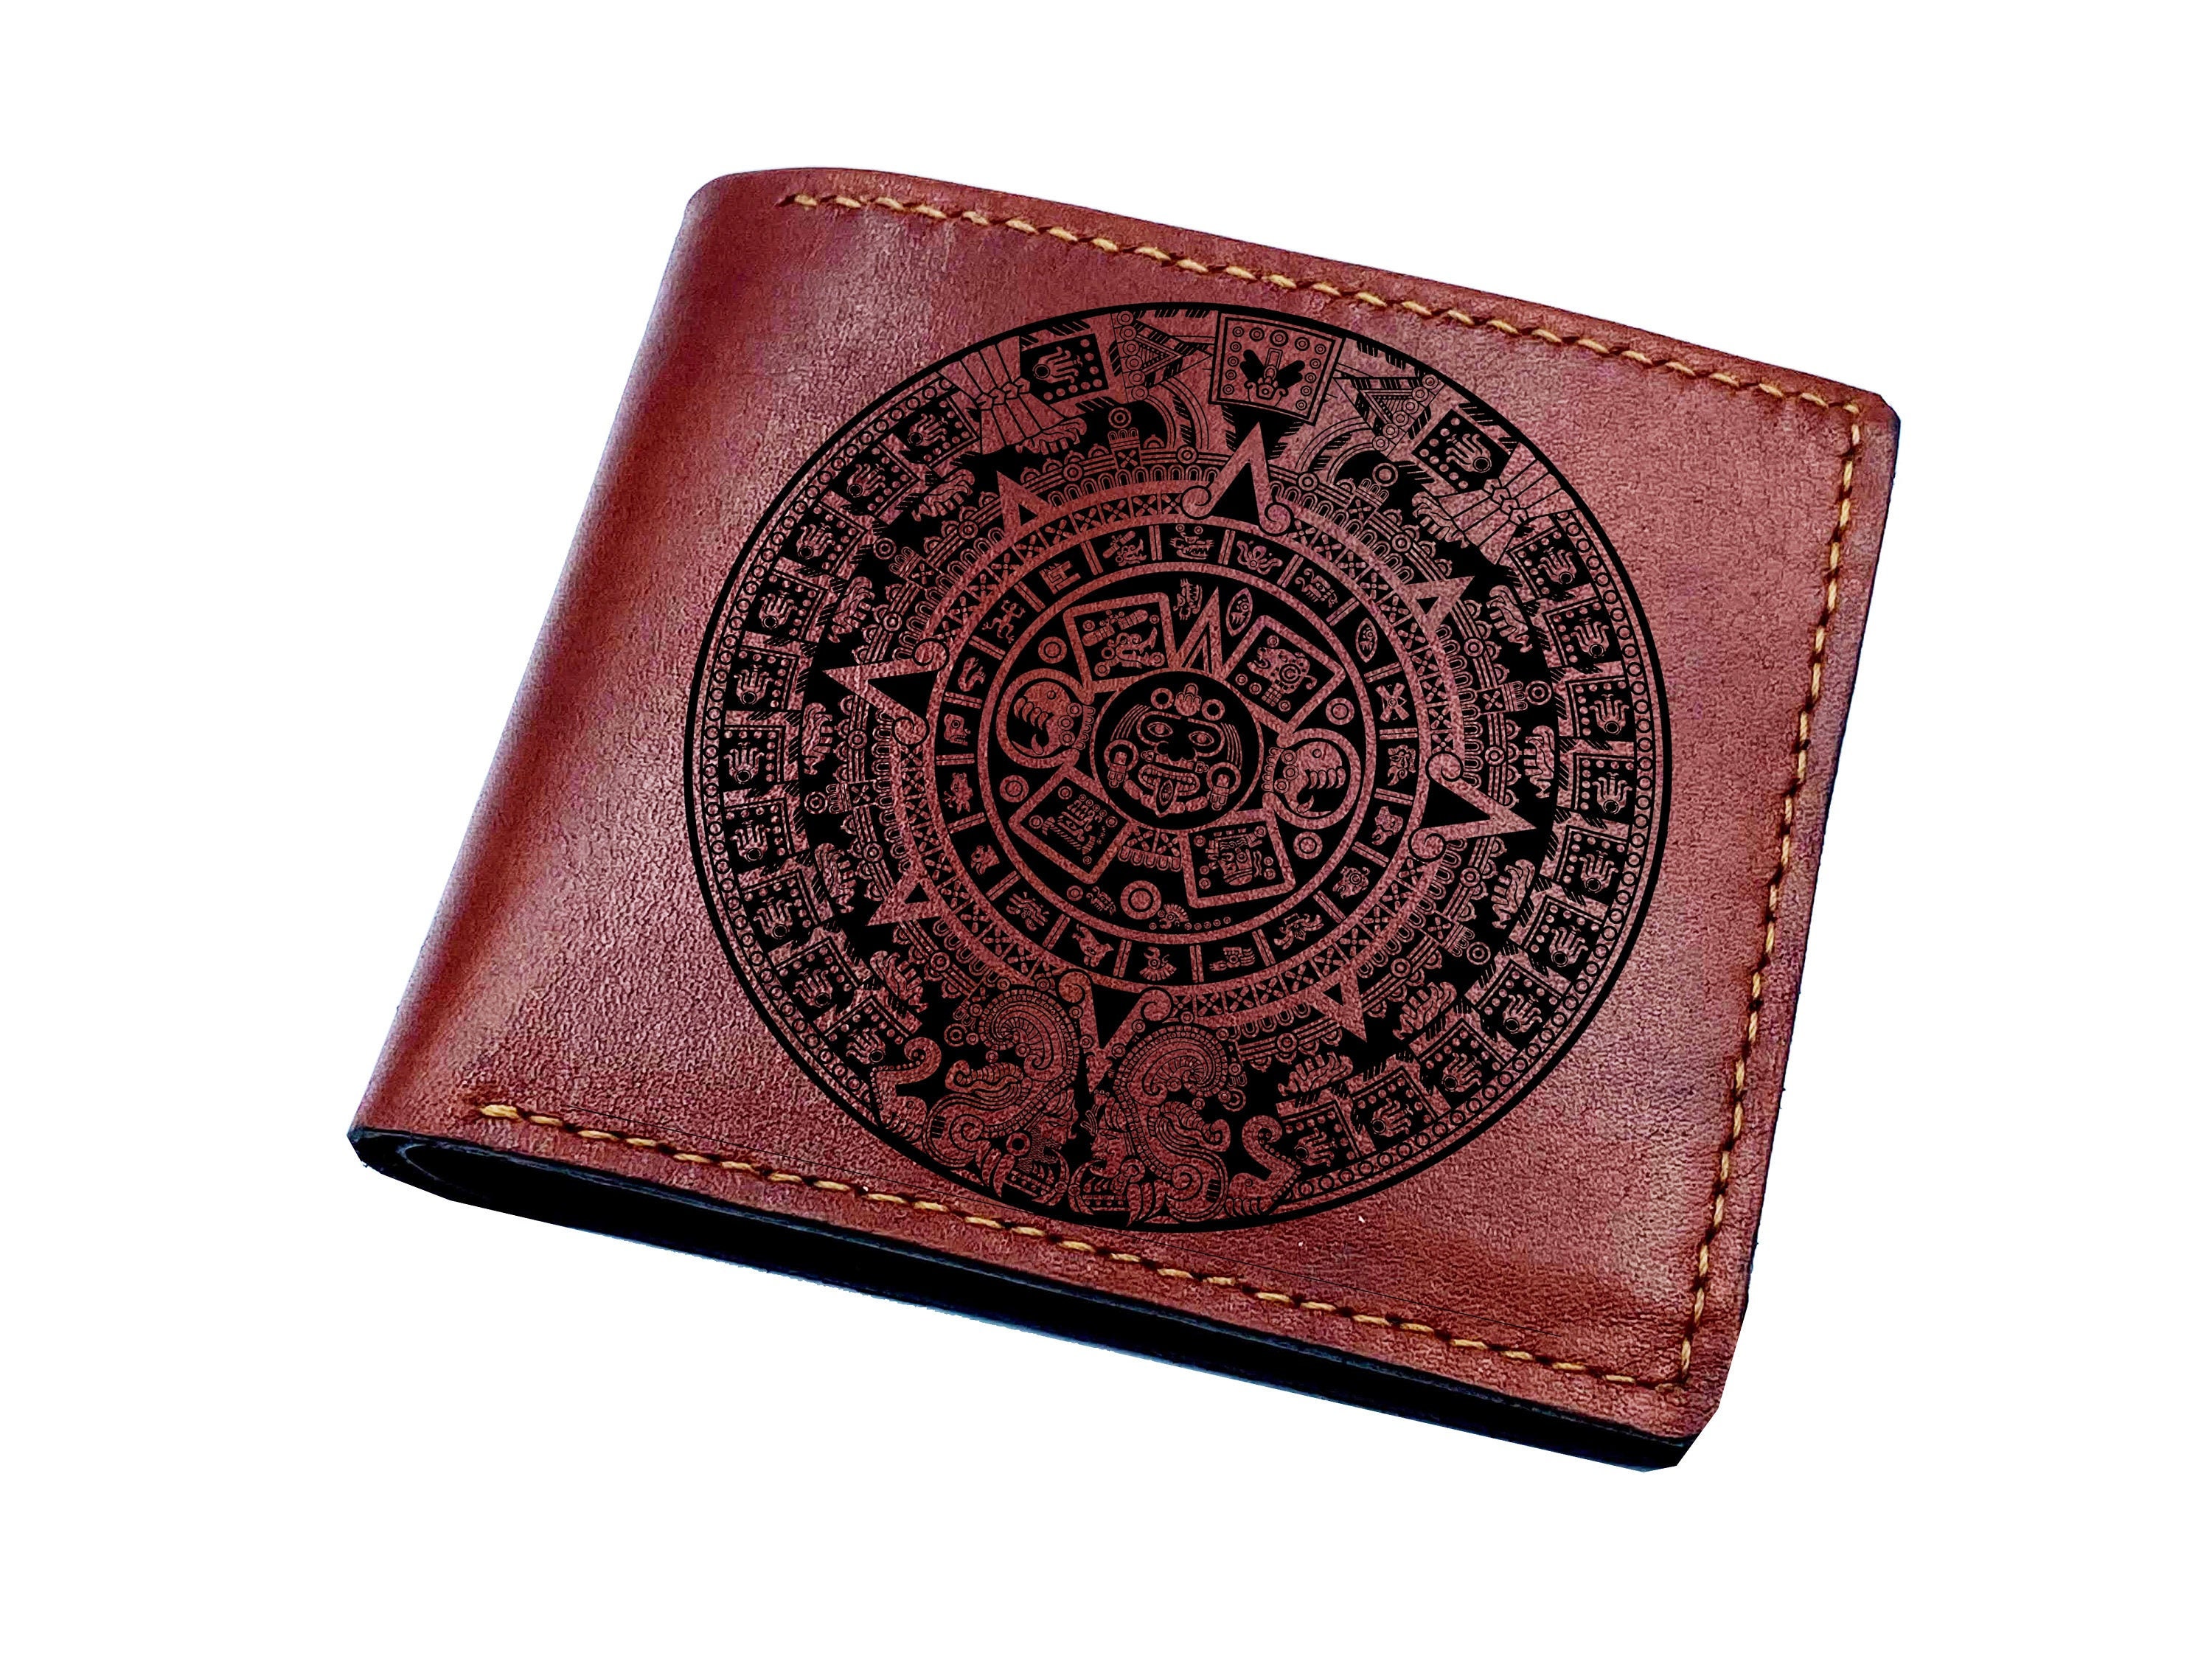 20. Aztec Art Engraved Wallet